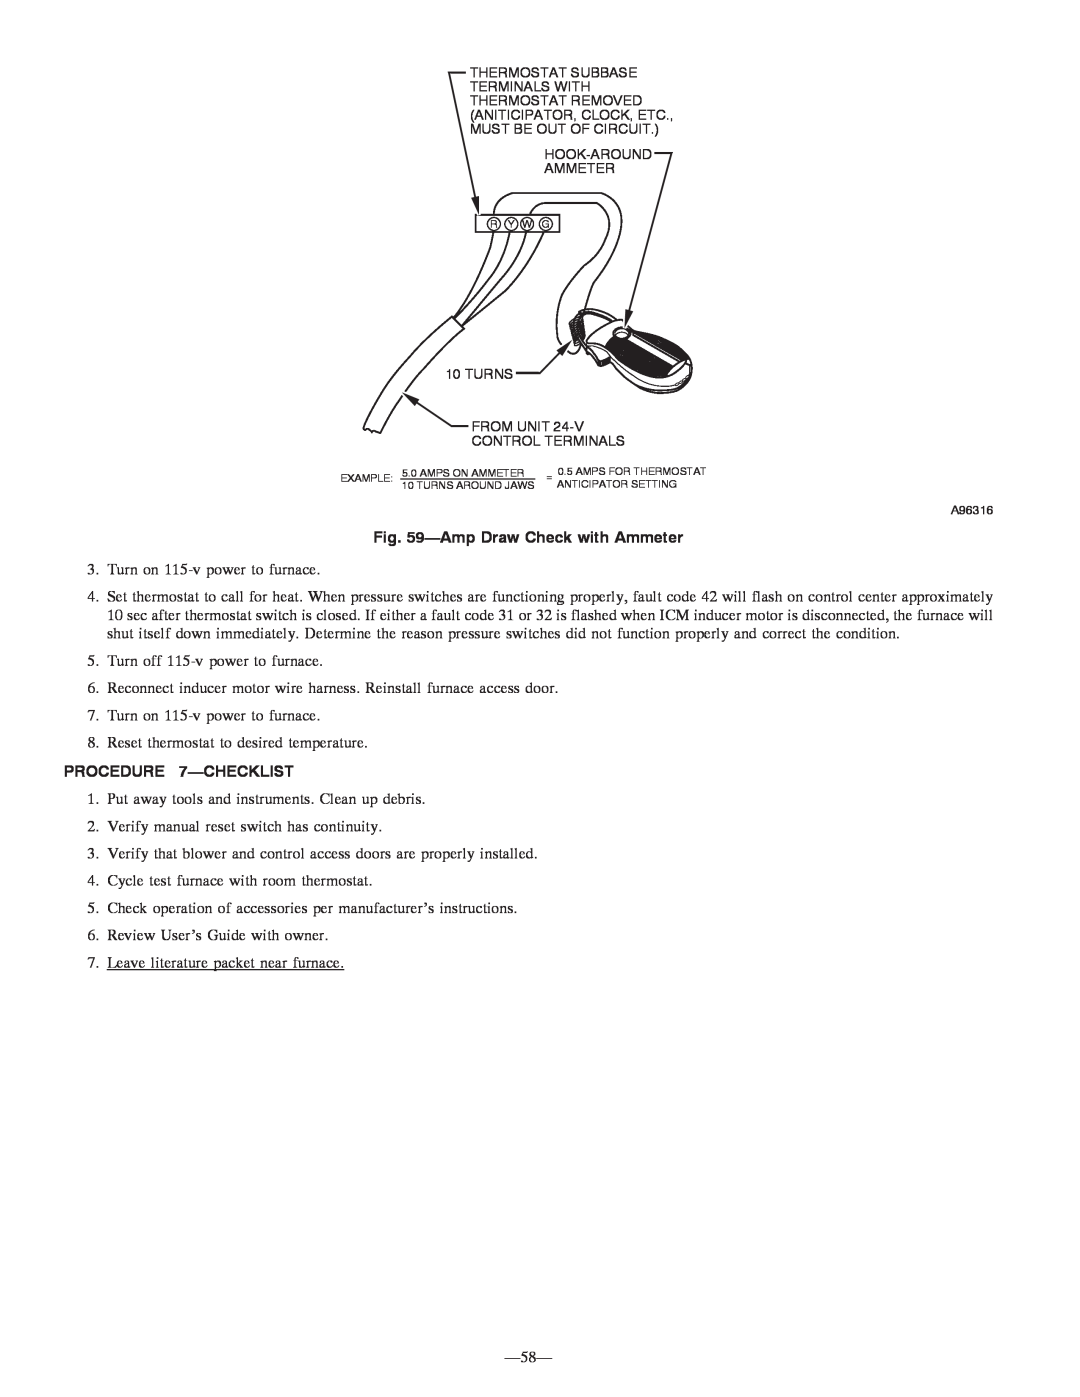 Bryant 355MAV instruction manual AmpDraw Check with Ammeter, PROCEDURE 7-CHECKLIST 